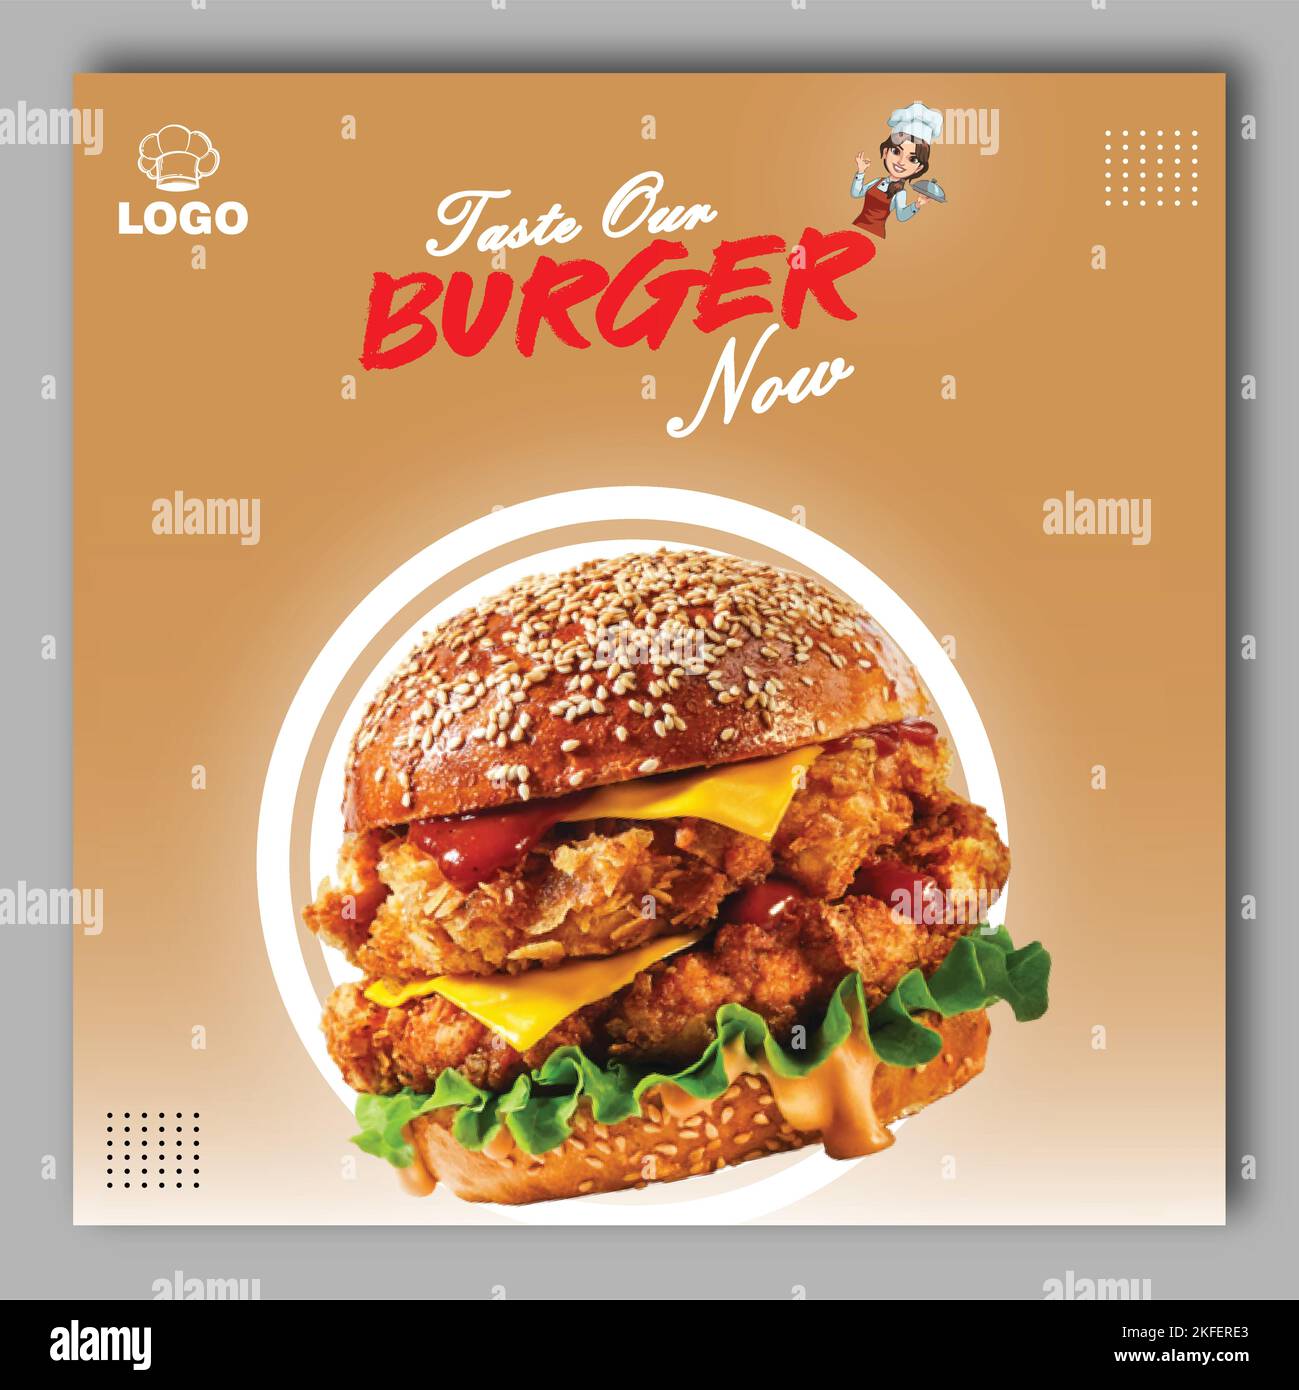 Business Corporate Social Media Post Template Für Burger Restaurant Stock Vektor